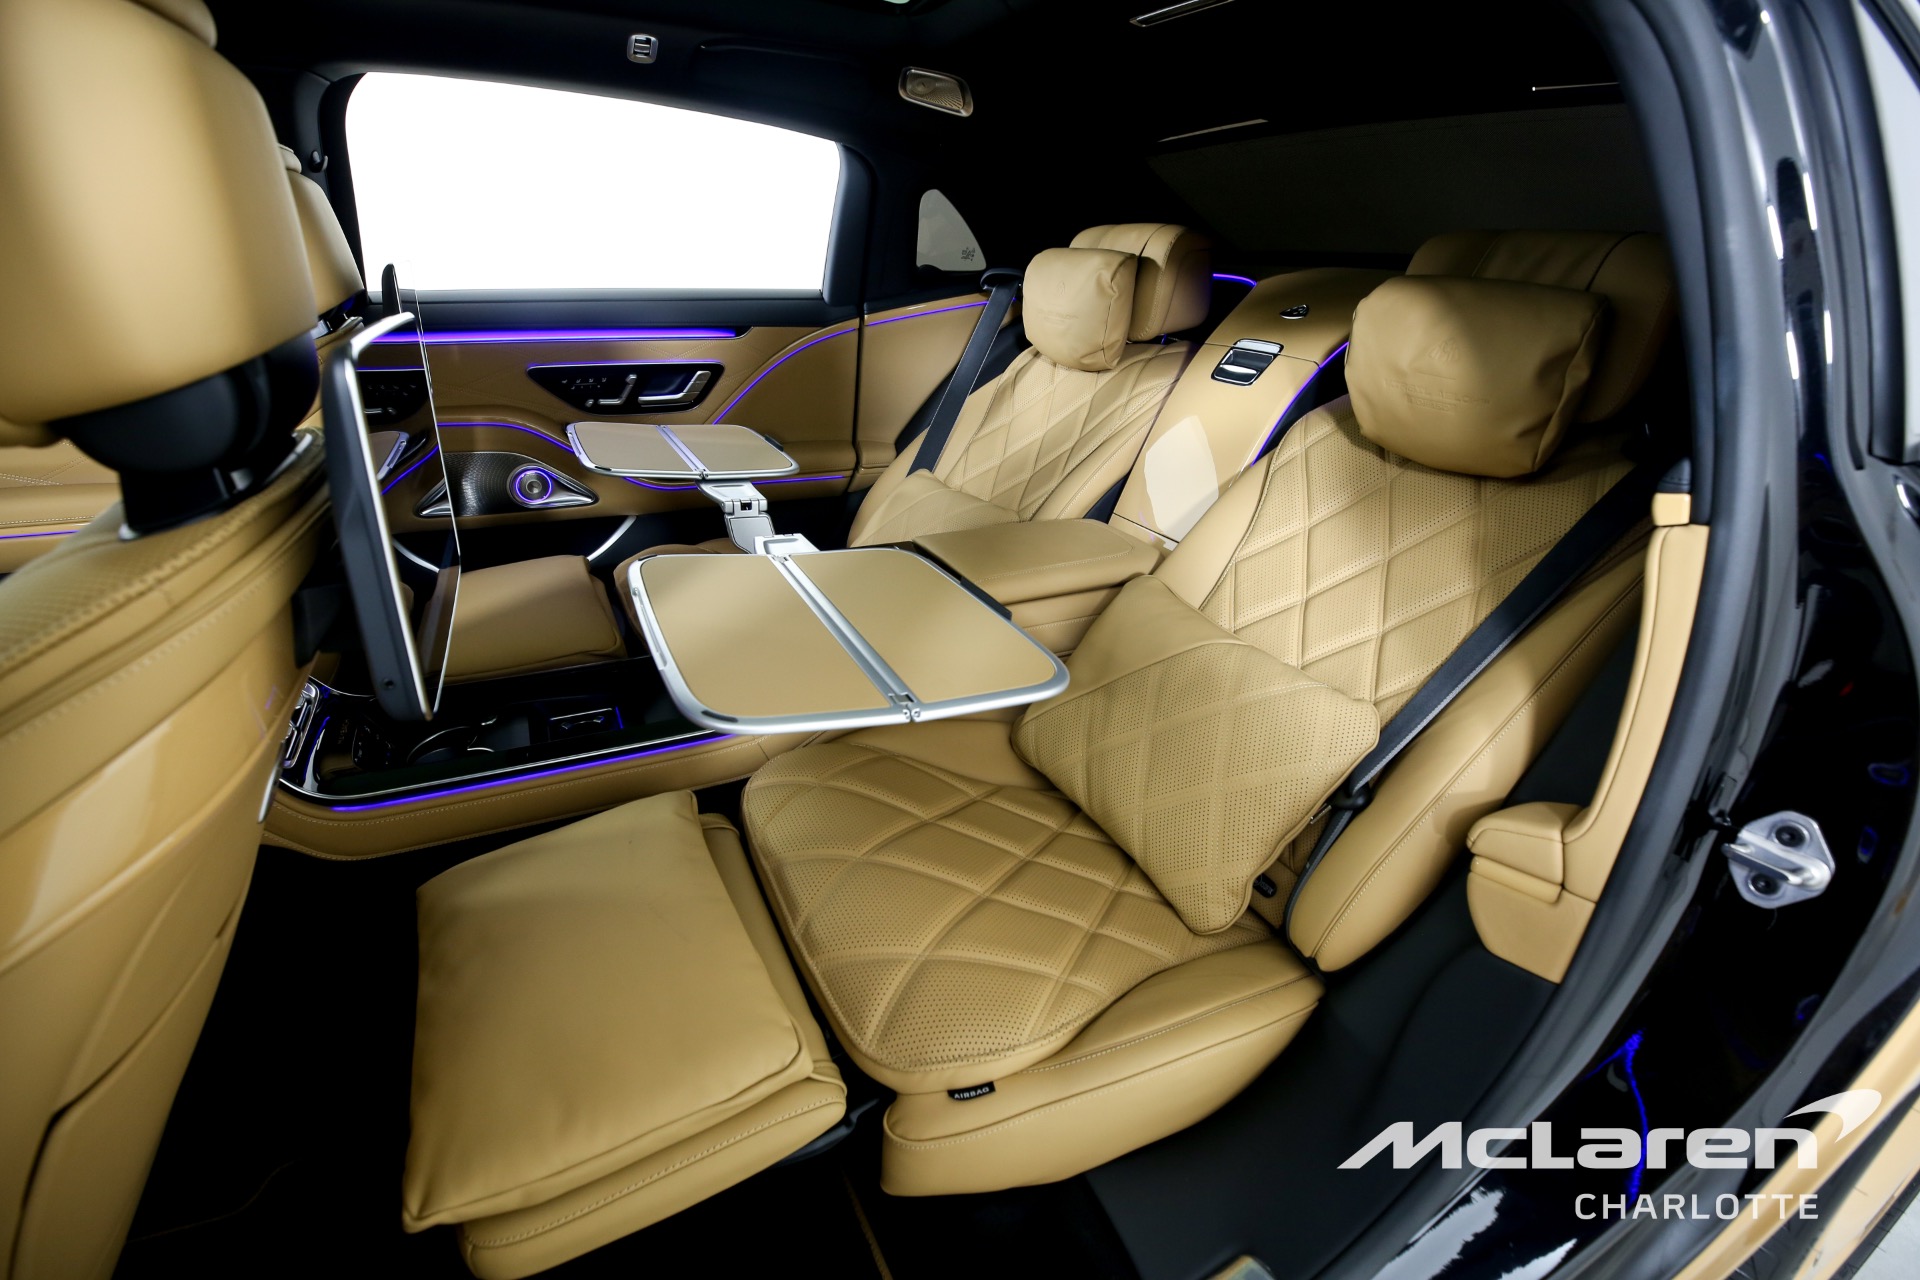 Mercedes-Maybach S 680 X223 Virgil Abloh Edition - 10 October 2023 -  Autogespot